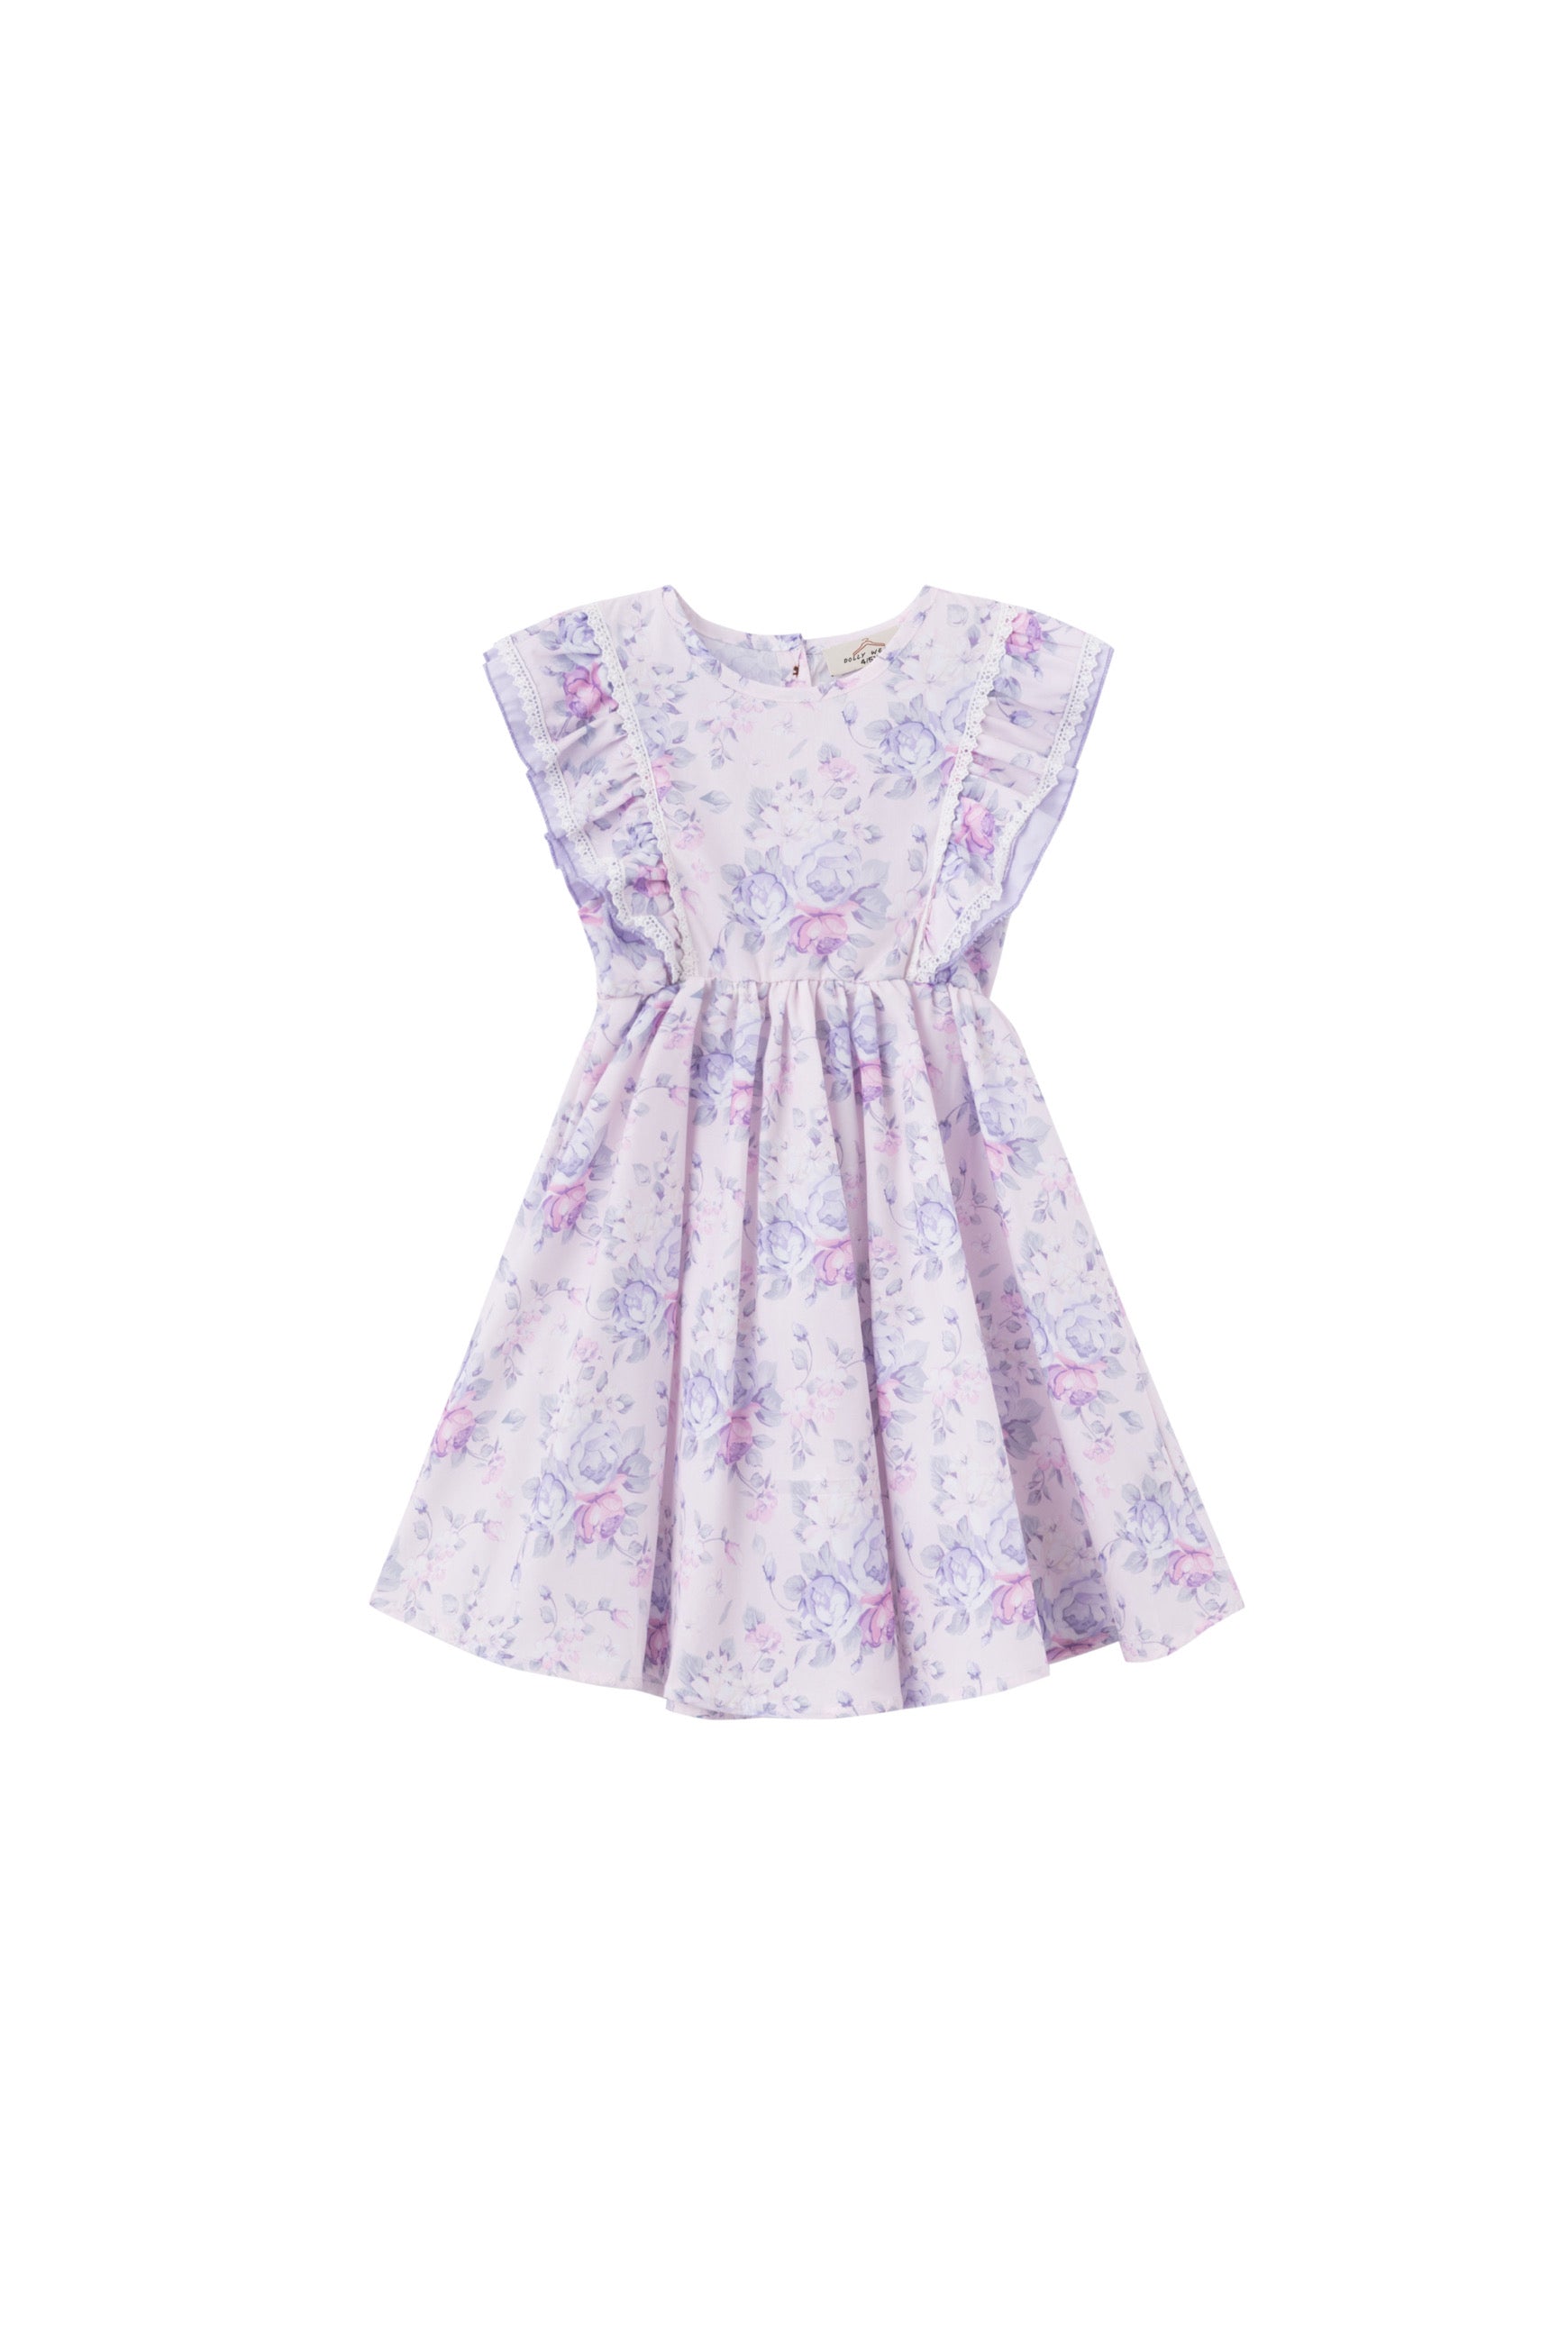 Lilac peony dress